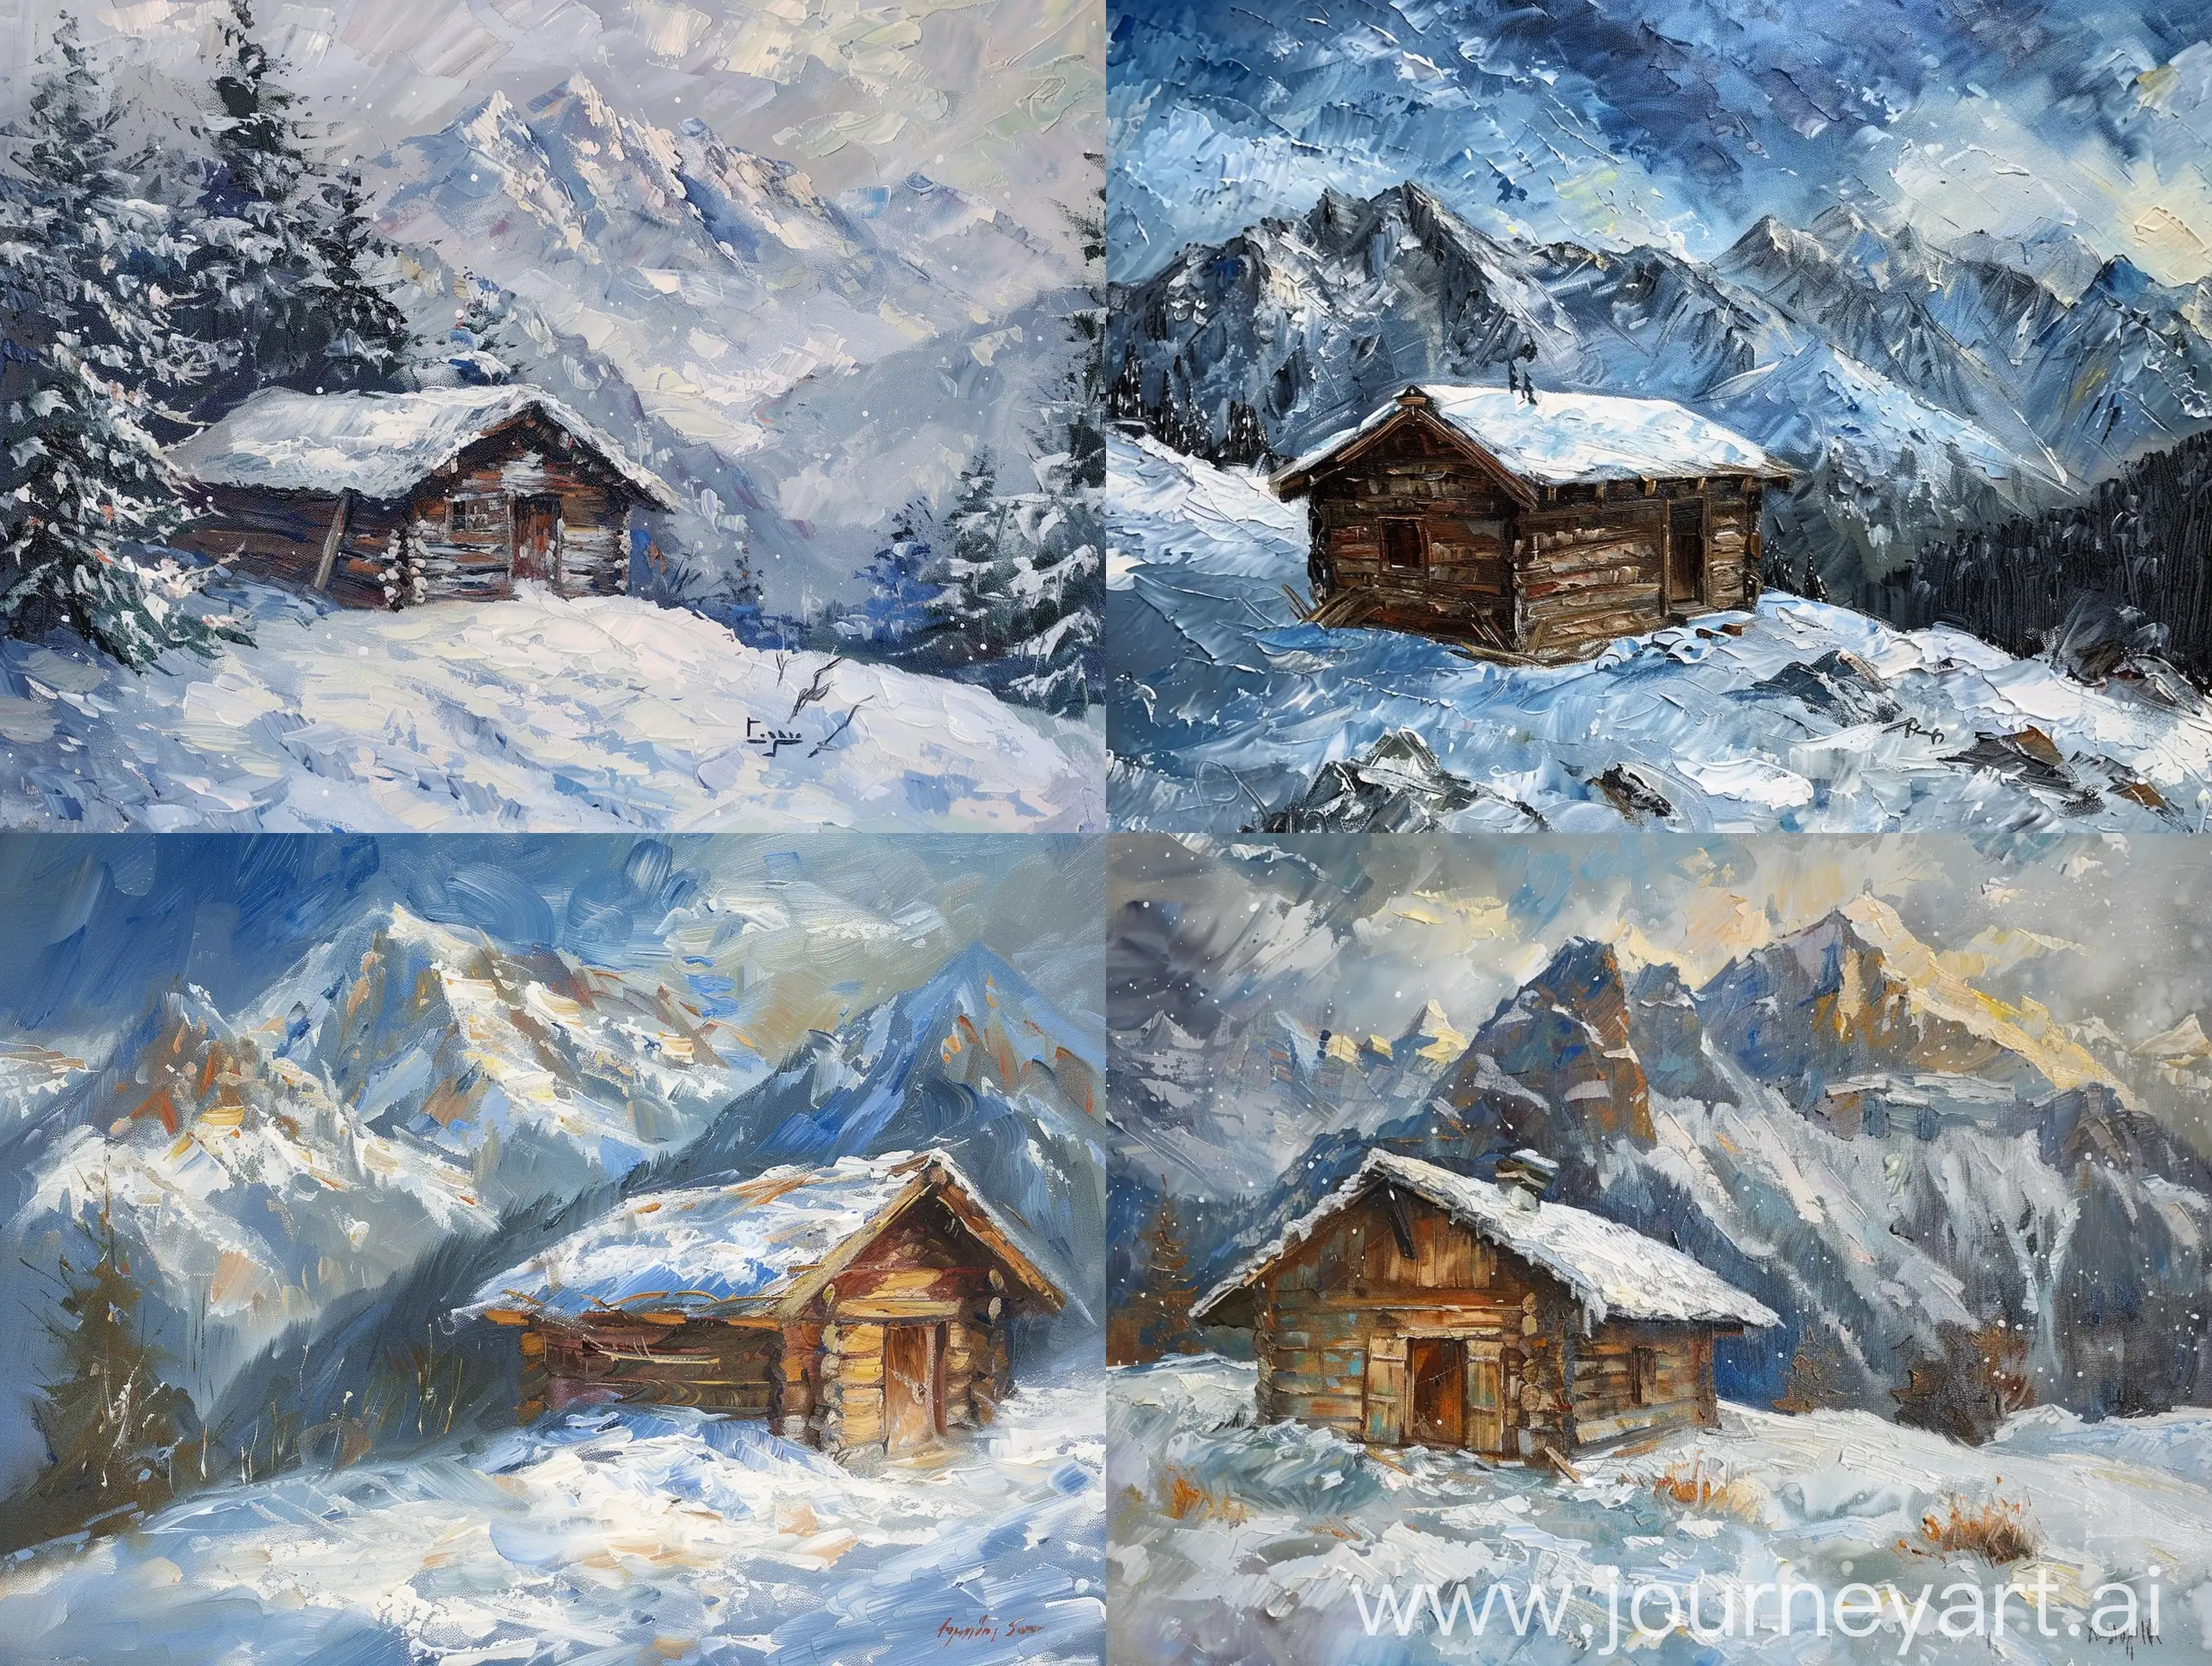 Winter-Mountain-Landscape-Van-Gogh-Style-Oil-Painting-of-Snowy-Wooden-Hut